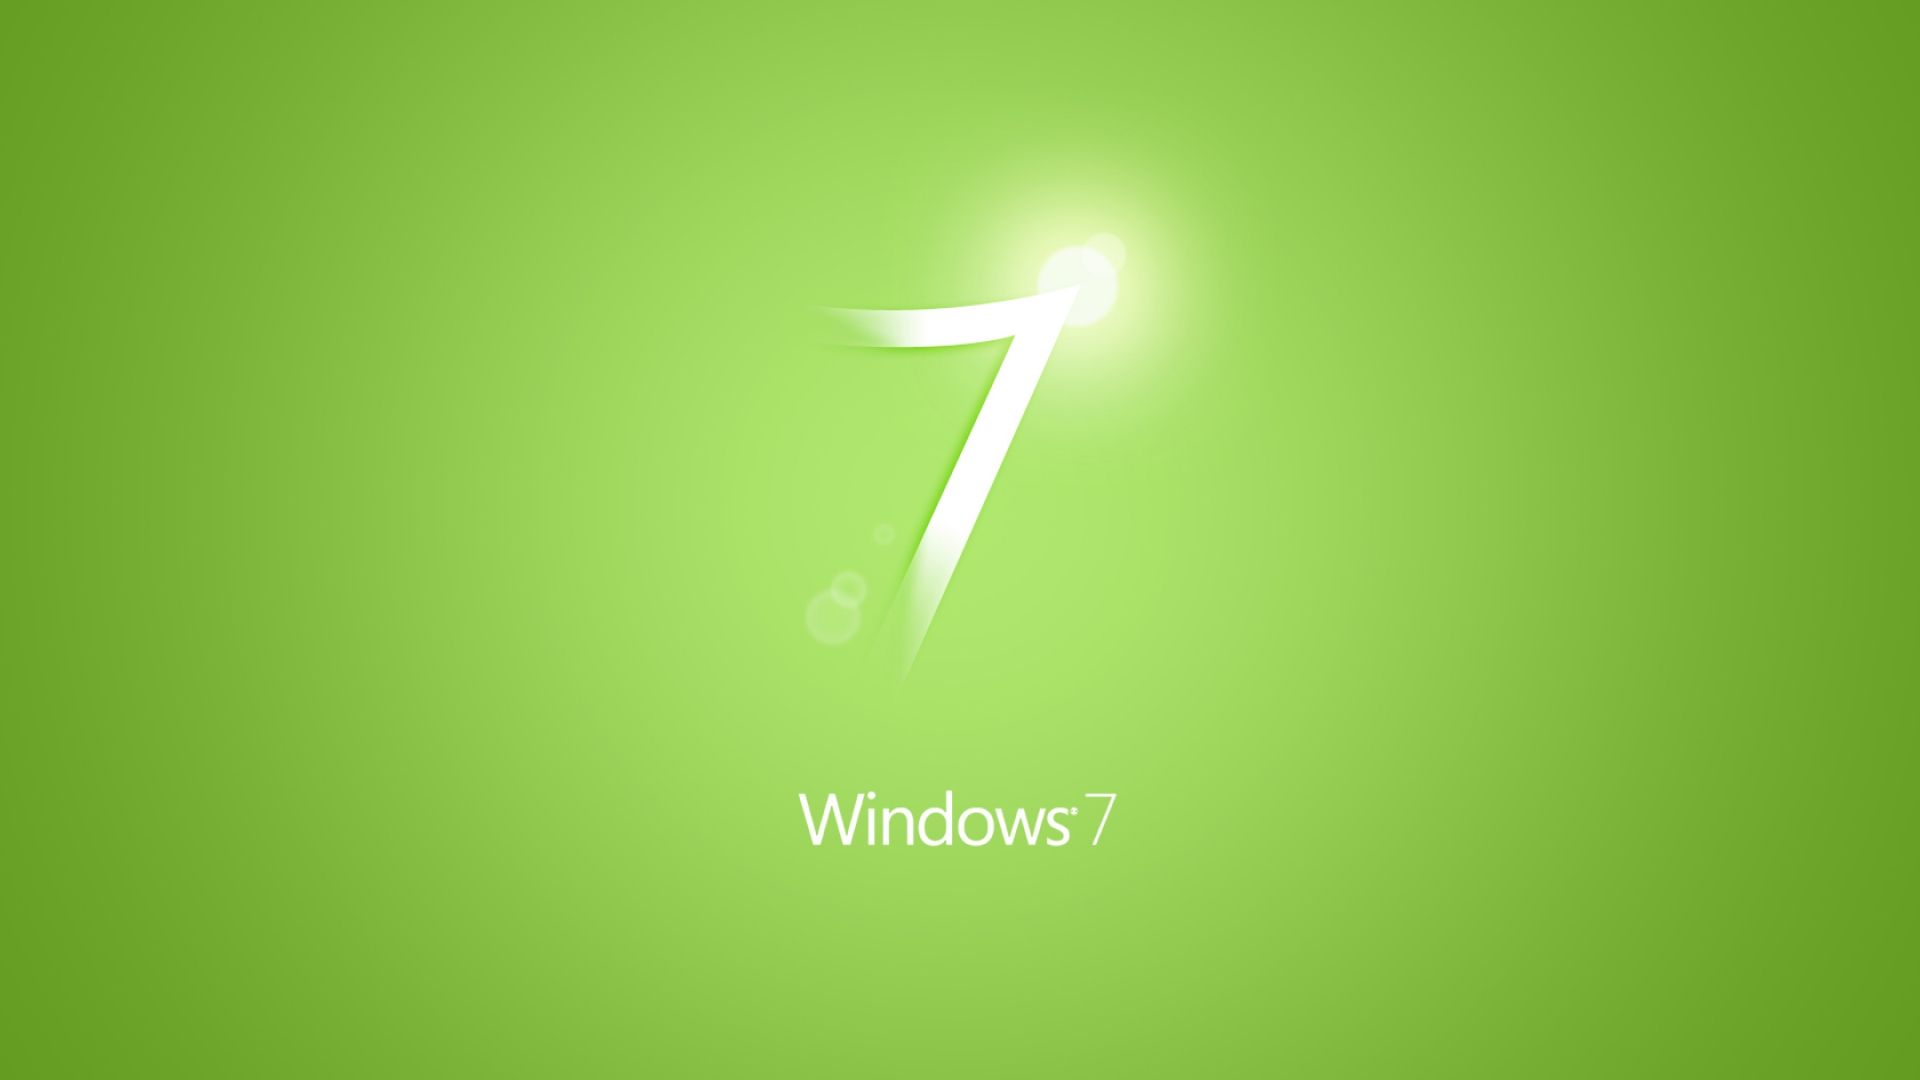 Simple green Windows 7 logo